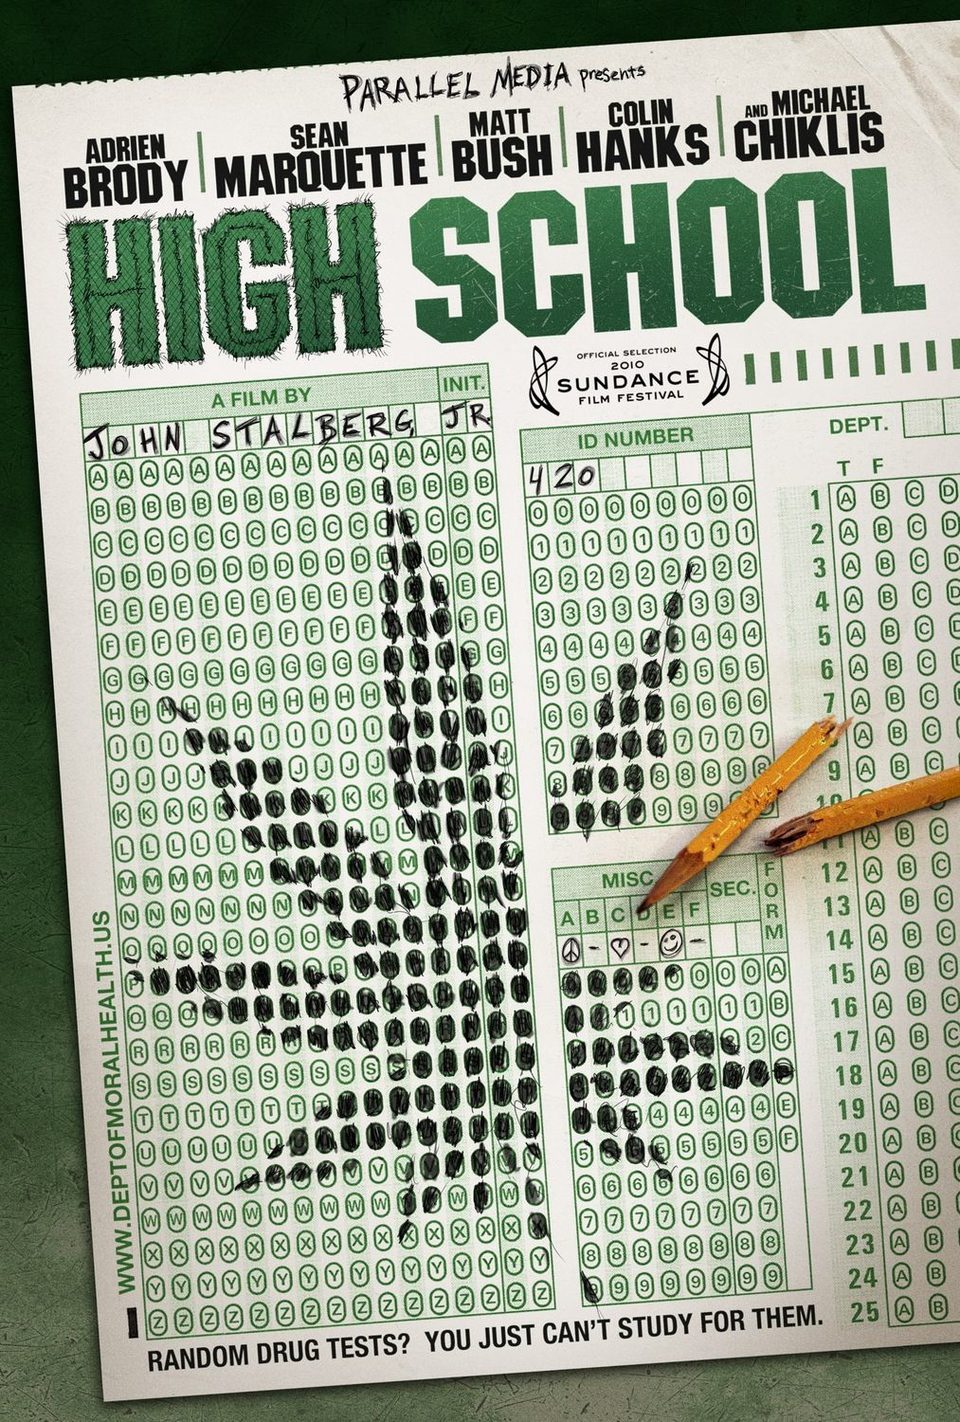 Poster of High School - EEUU